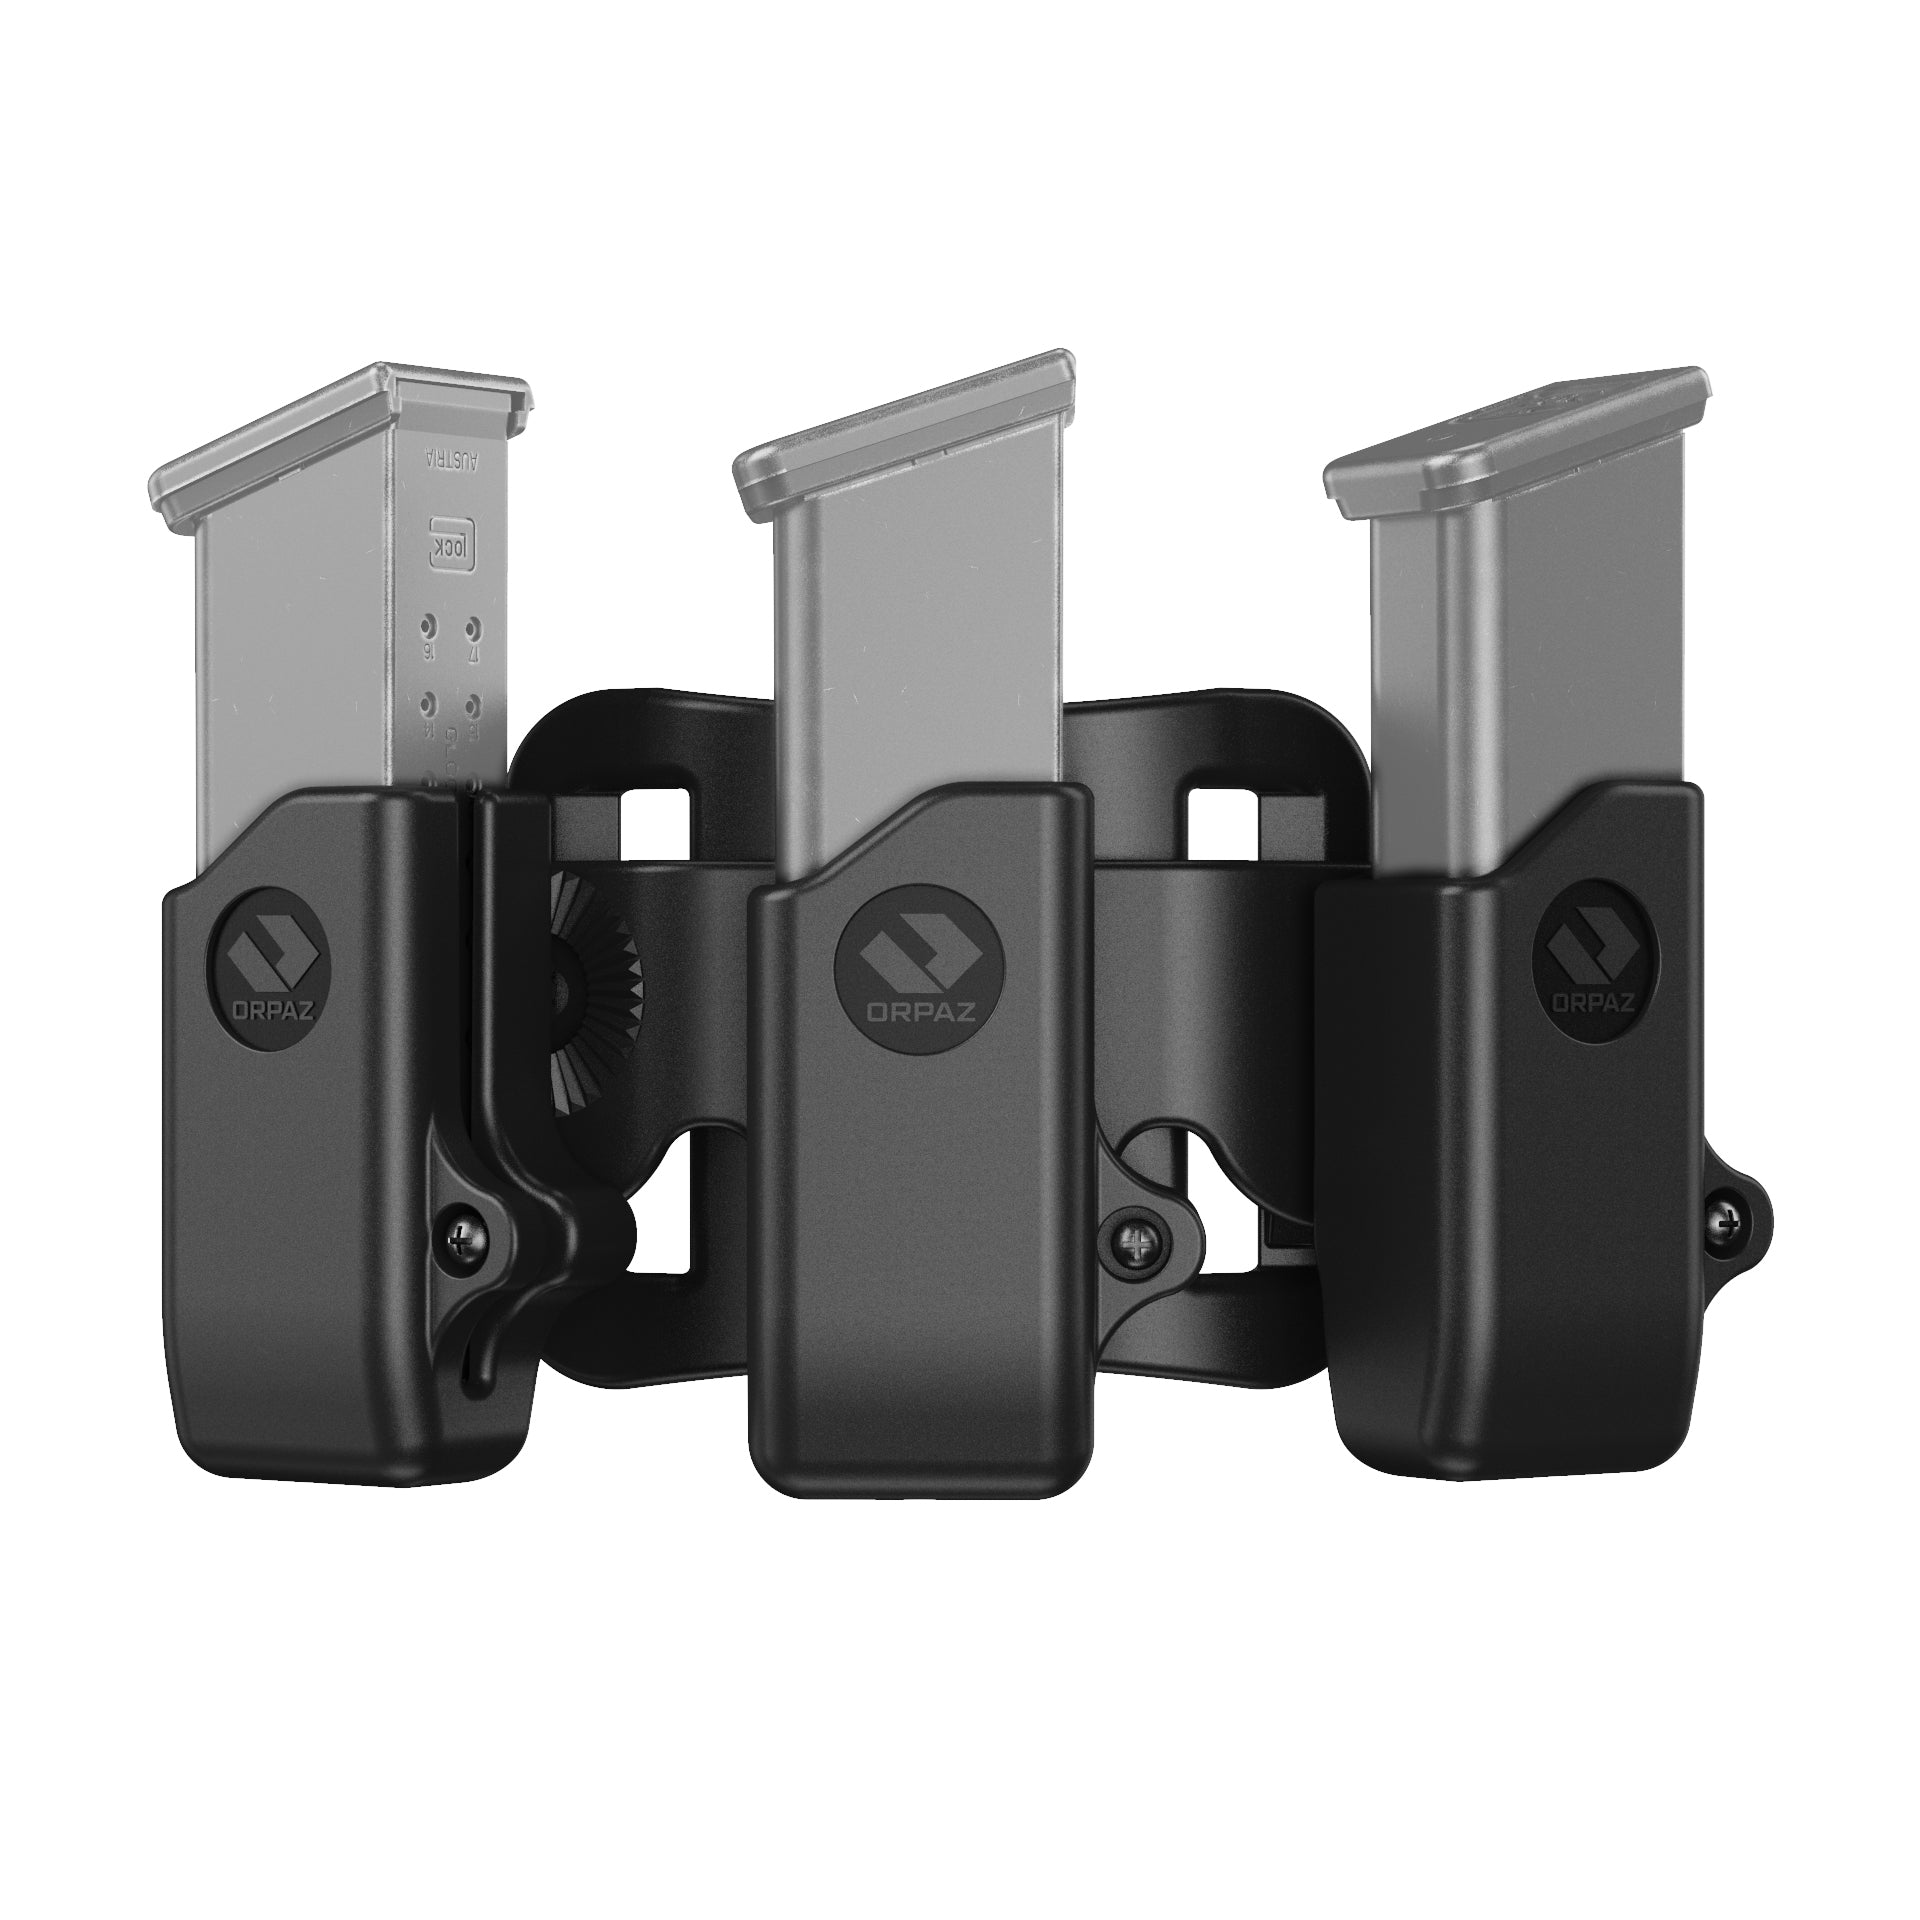 TrexNYC EZ Pass Mounting Strips, Heavy-Duty EZPass/IPass/Toll Pass Mounting  Strips, Peel and Stick Adhesive Strips Dual Lock Tape, 4 Packs